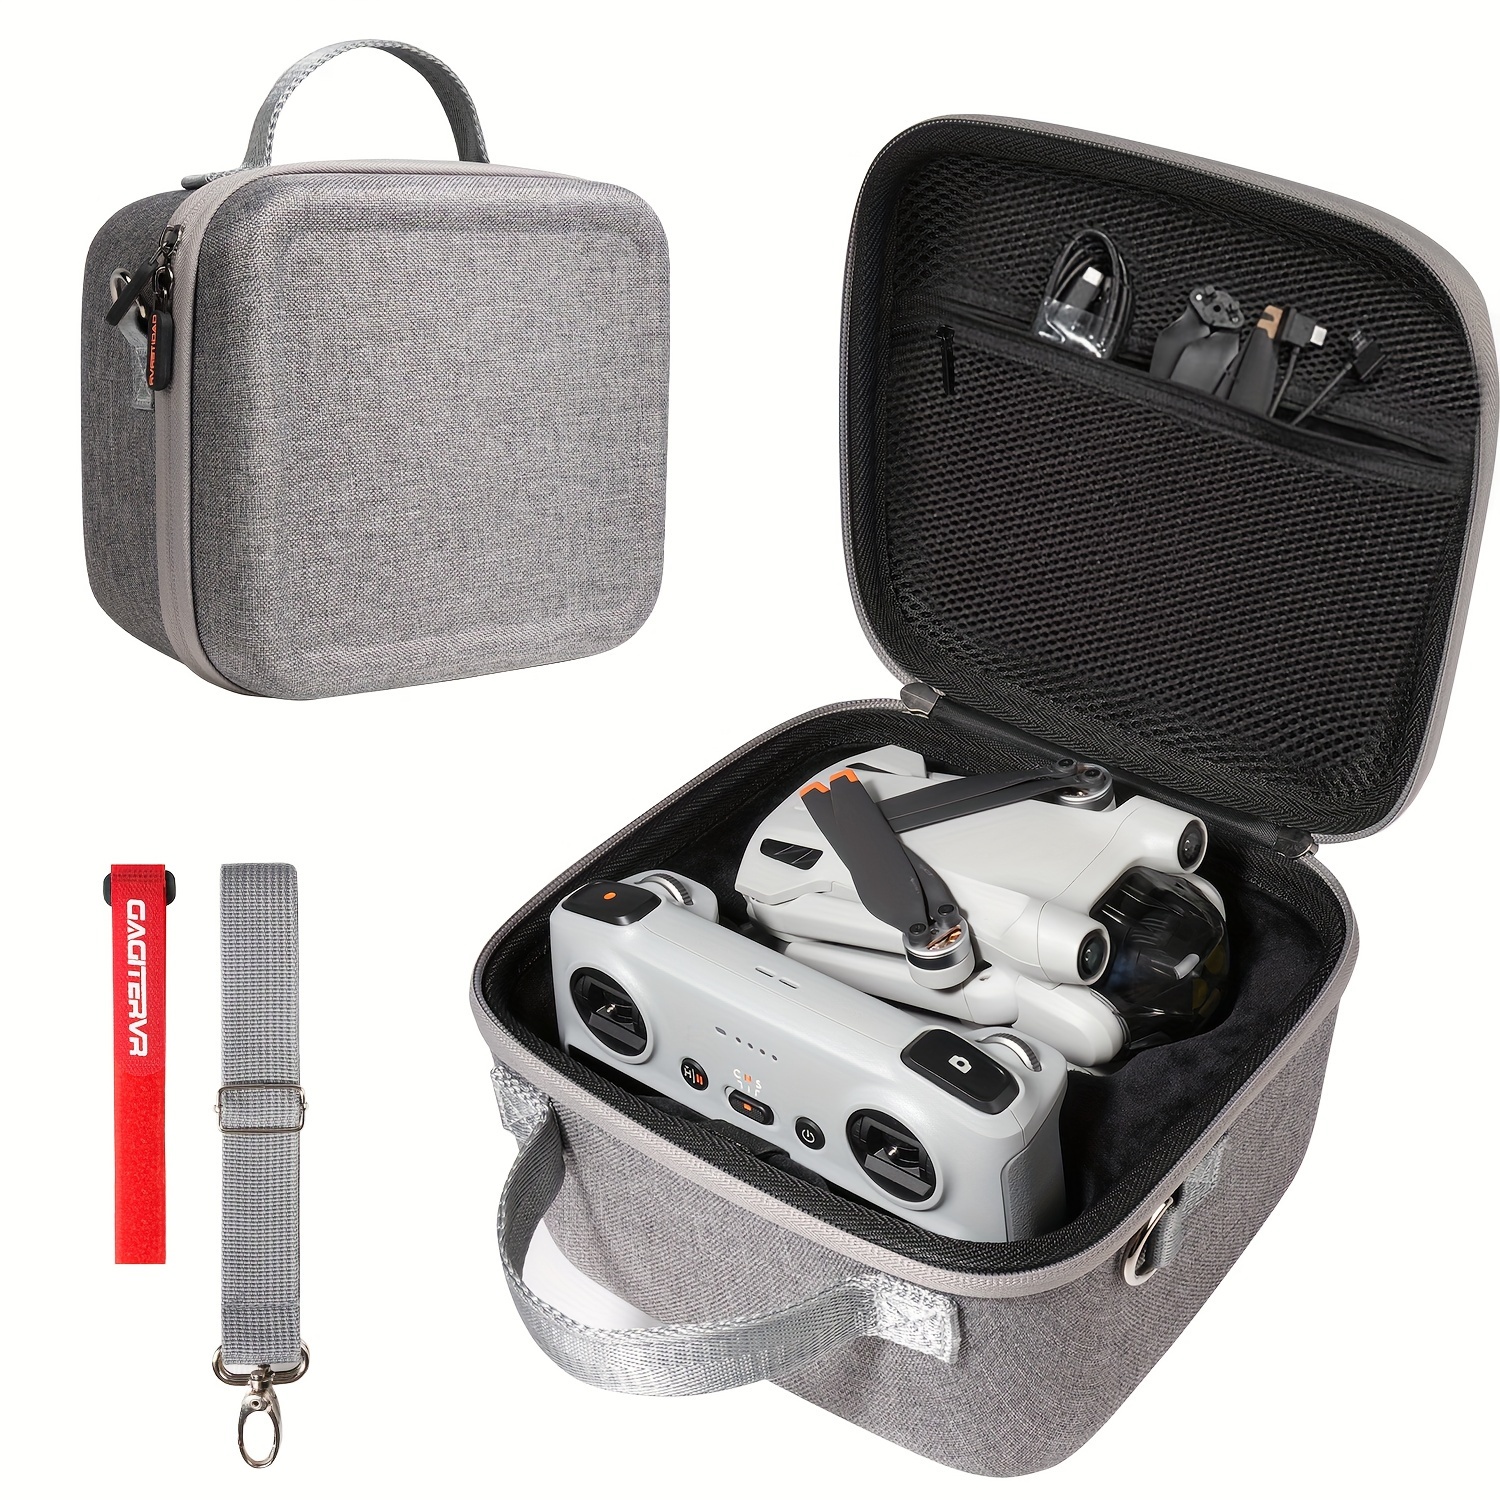 For DJI Mini 3 Pro Drone Controller Shockproof Waterproof Backpack Bag Hard  Case